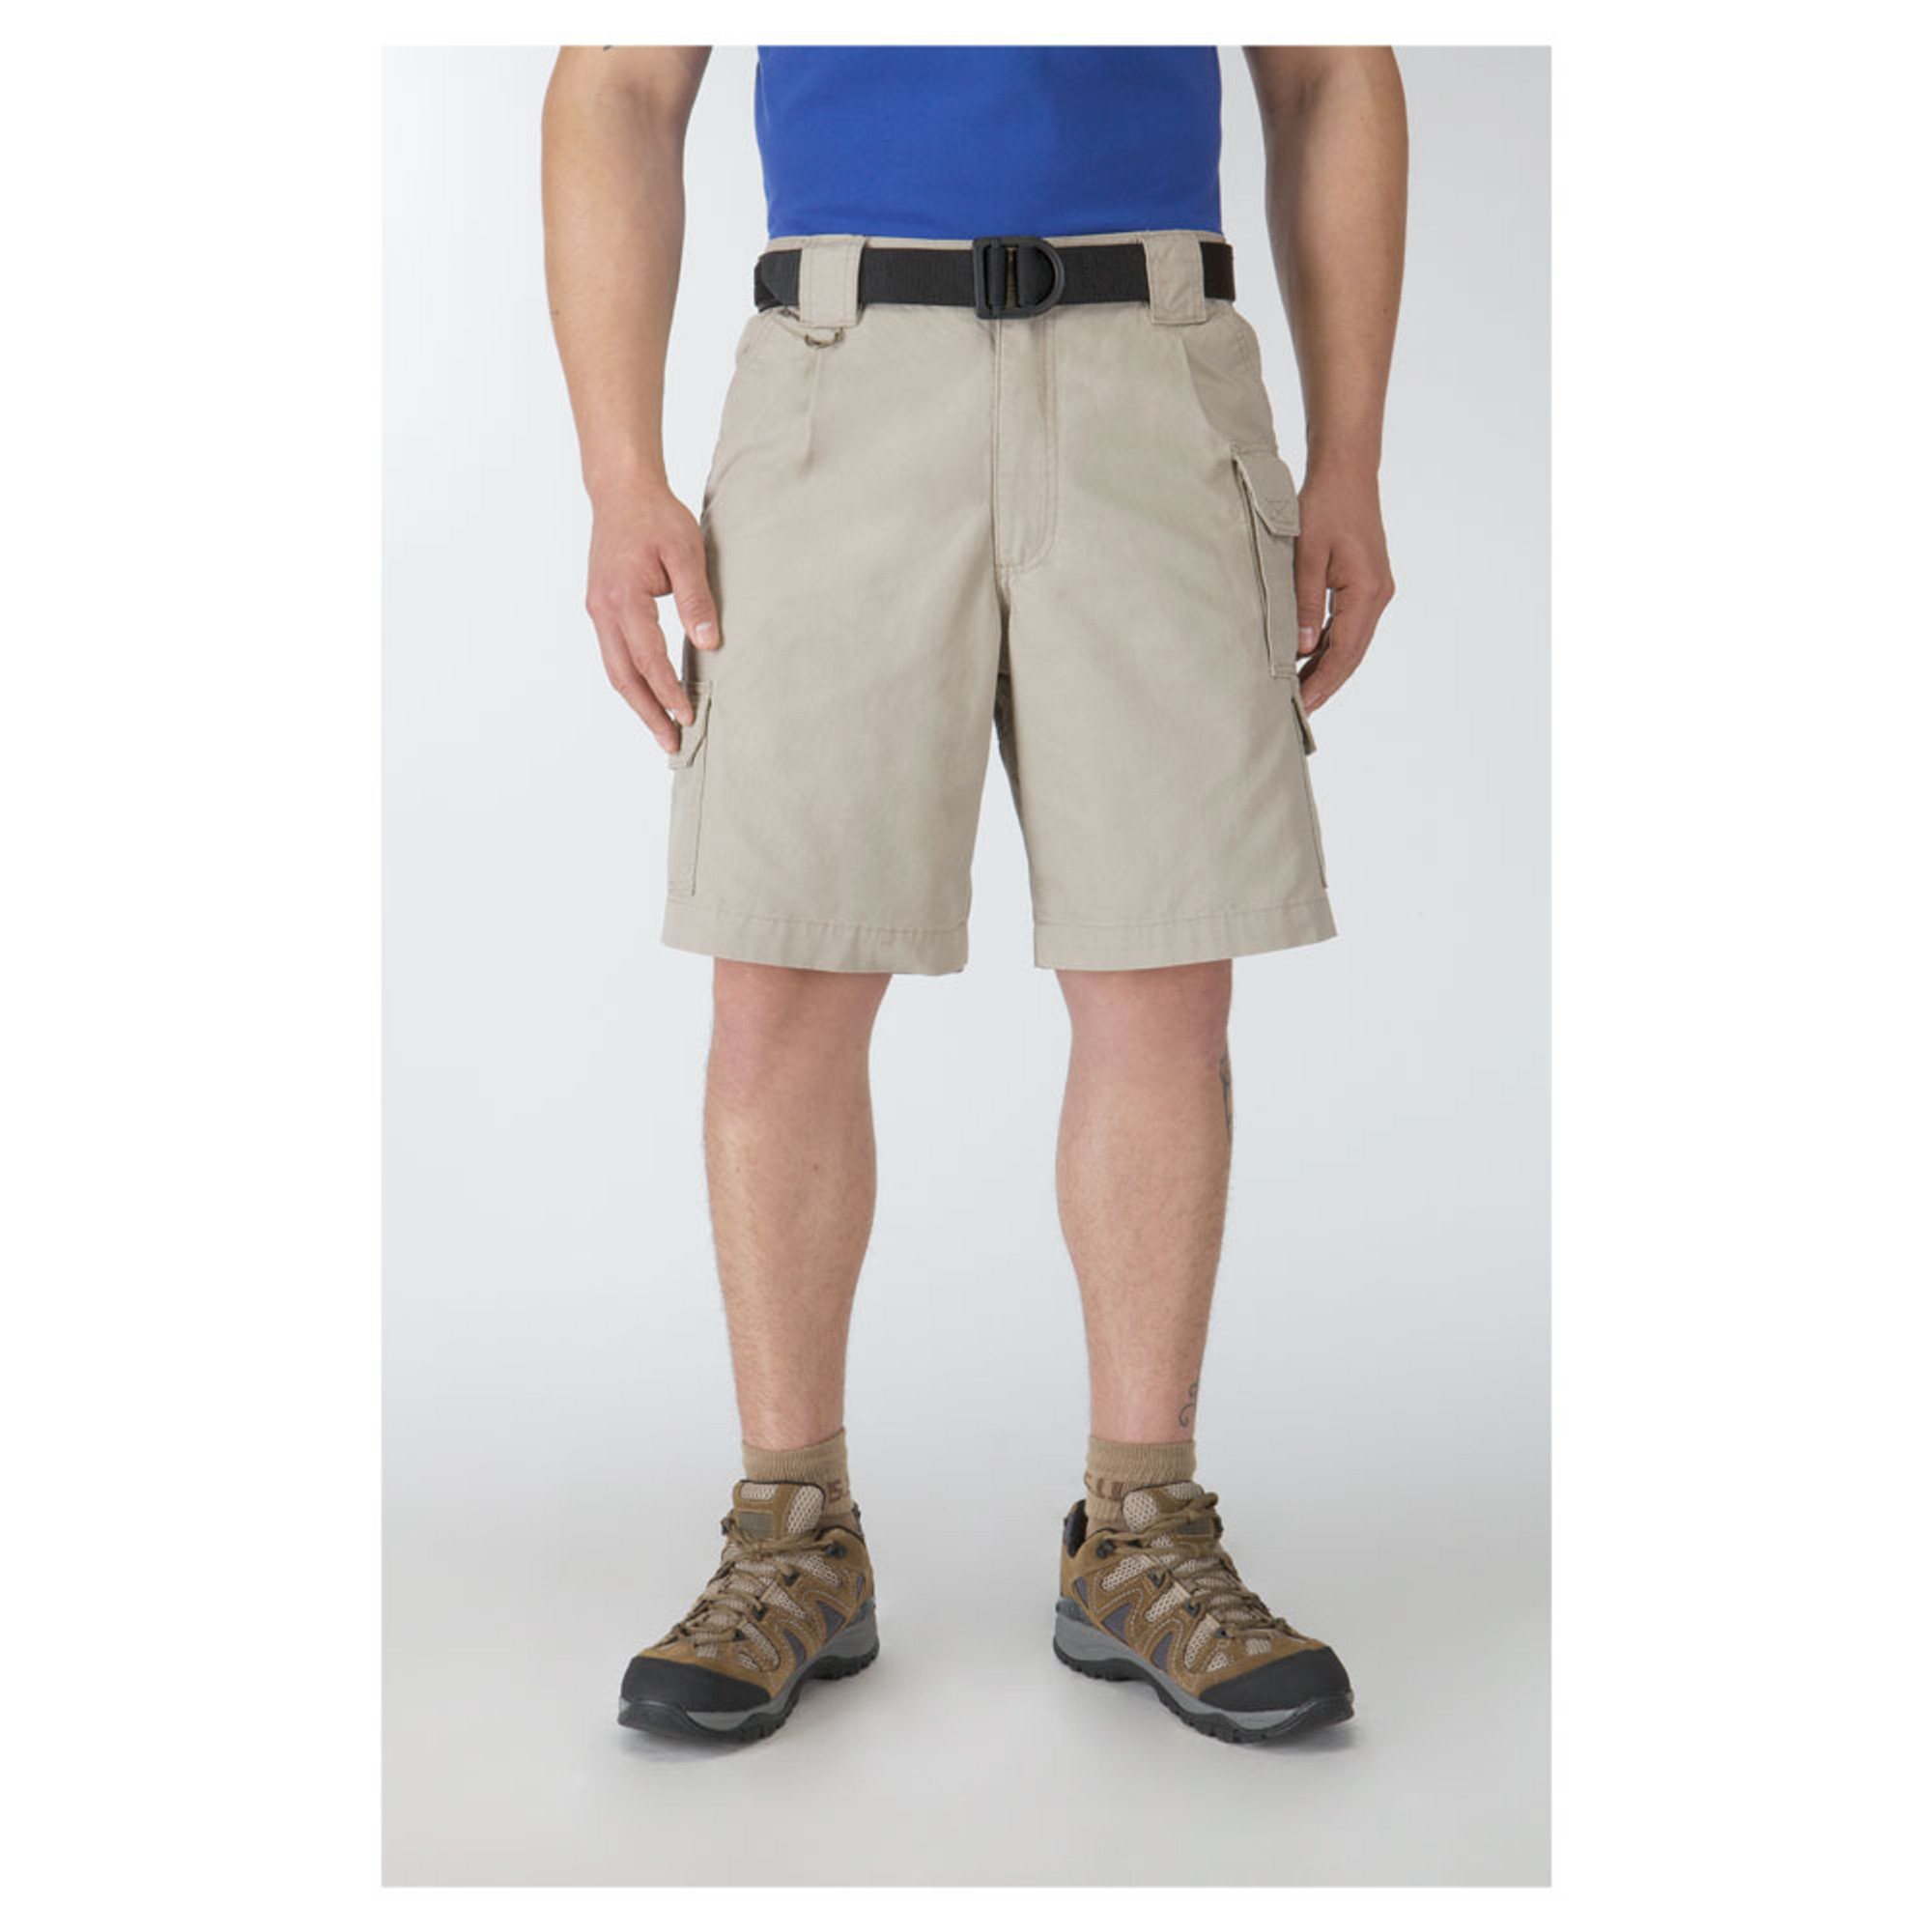 5.11 Men's Tactical Shorts - Khaki